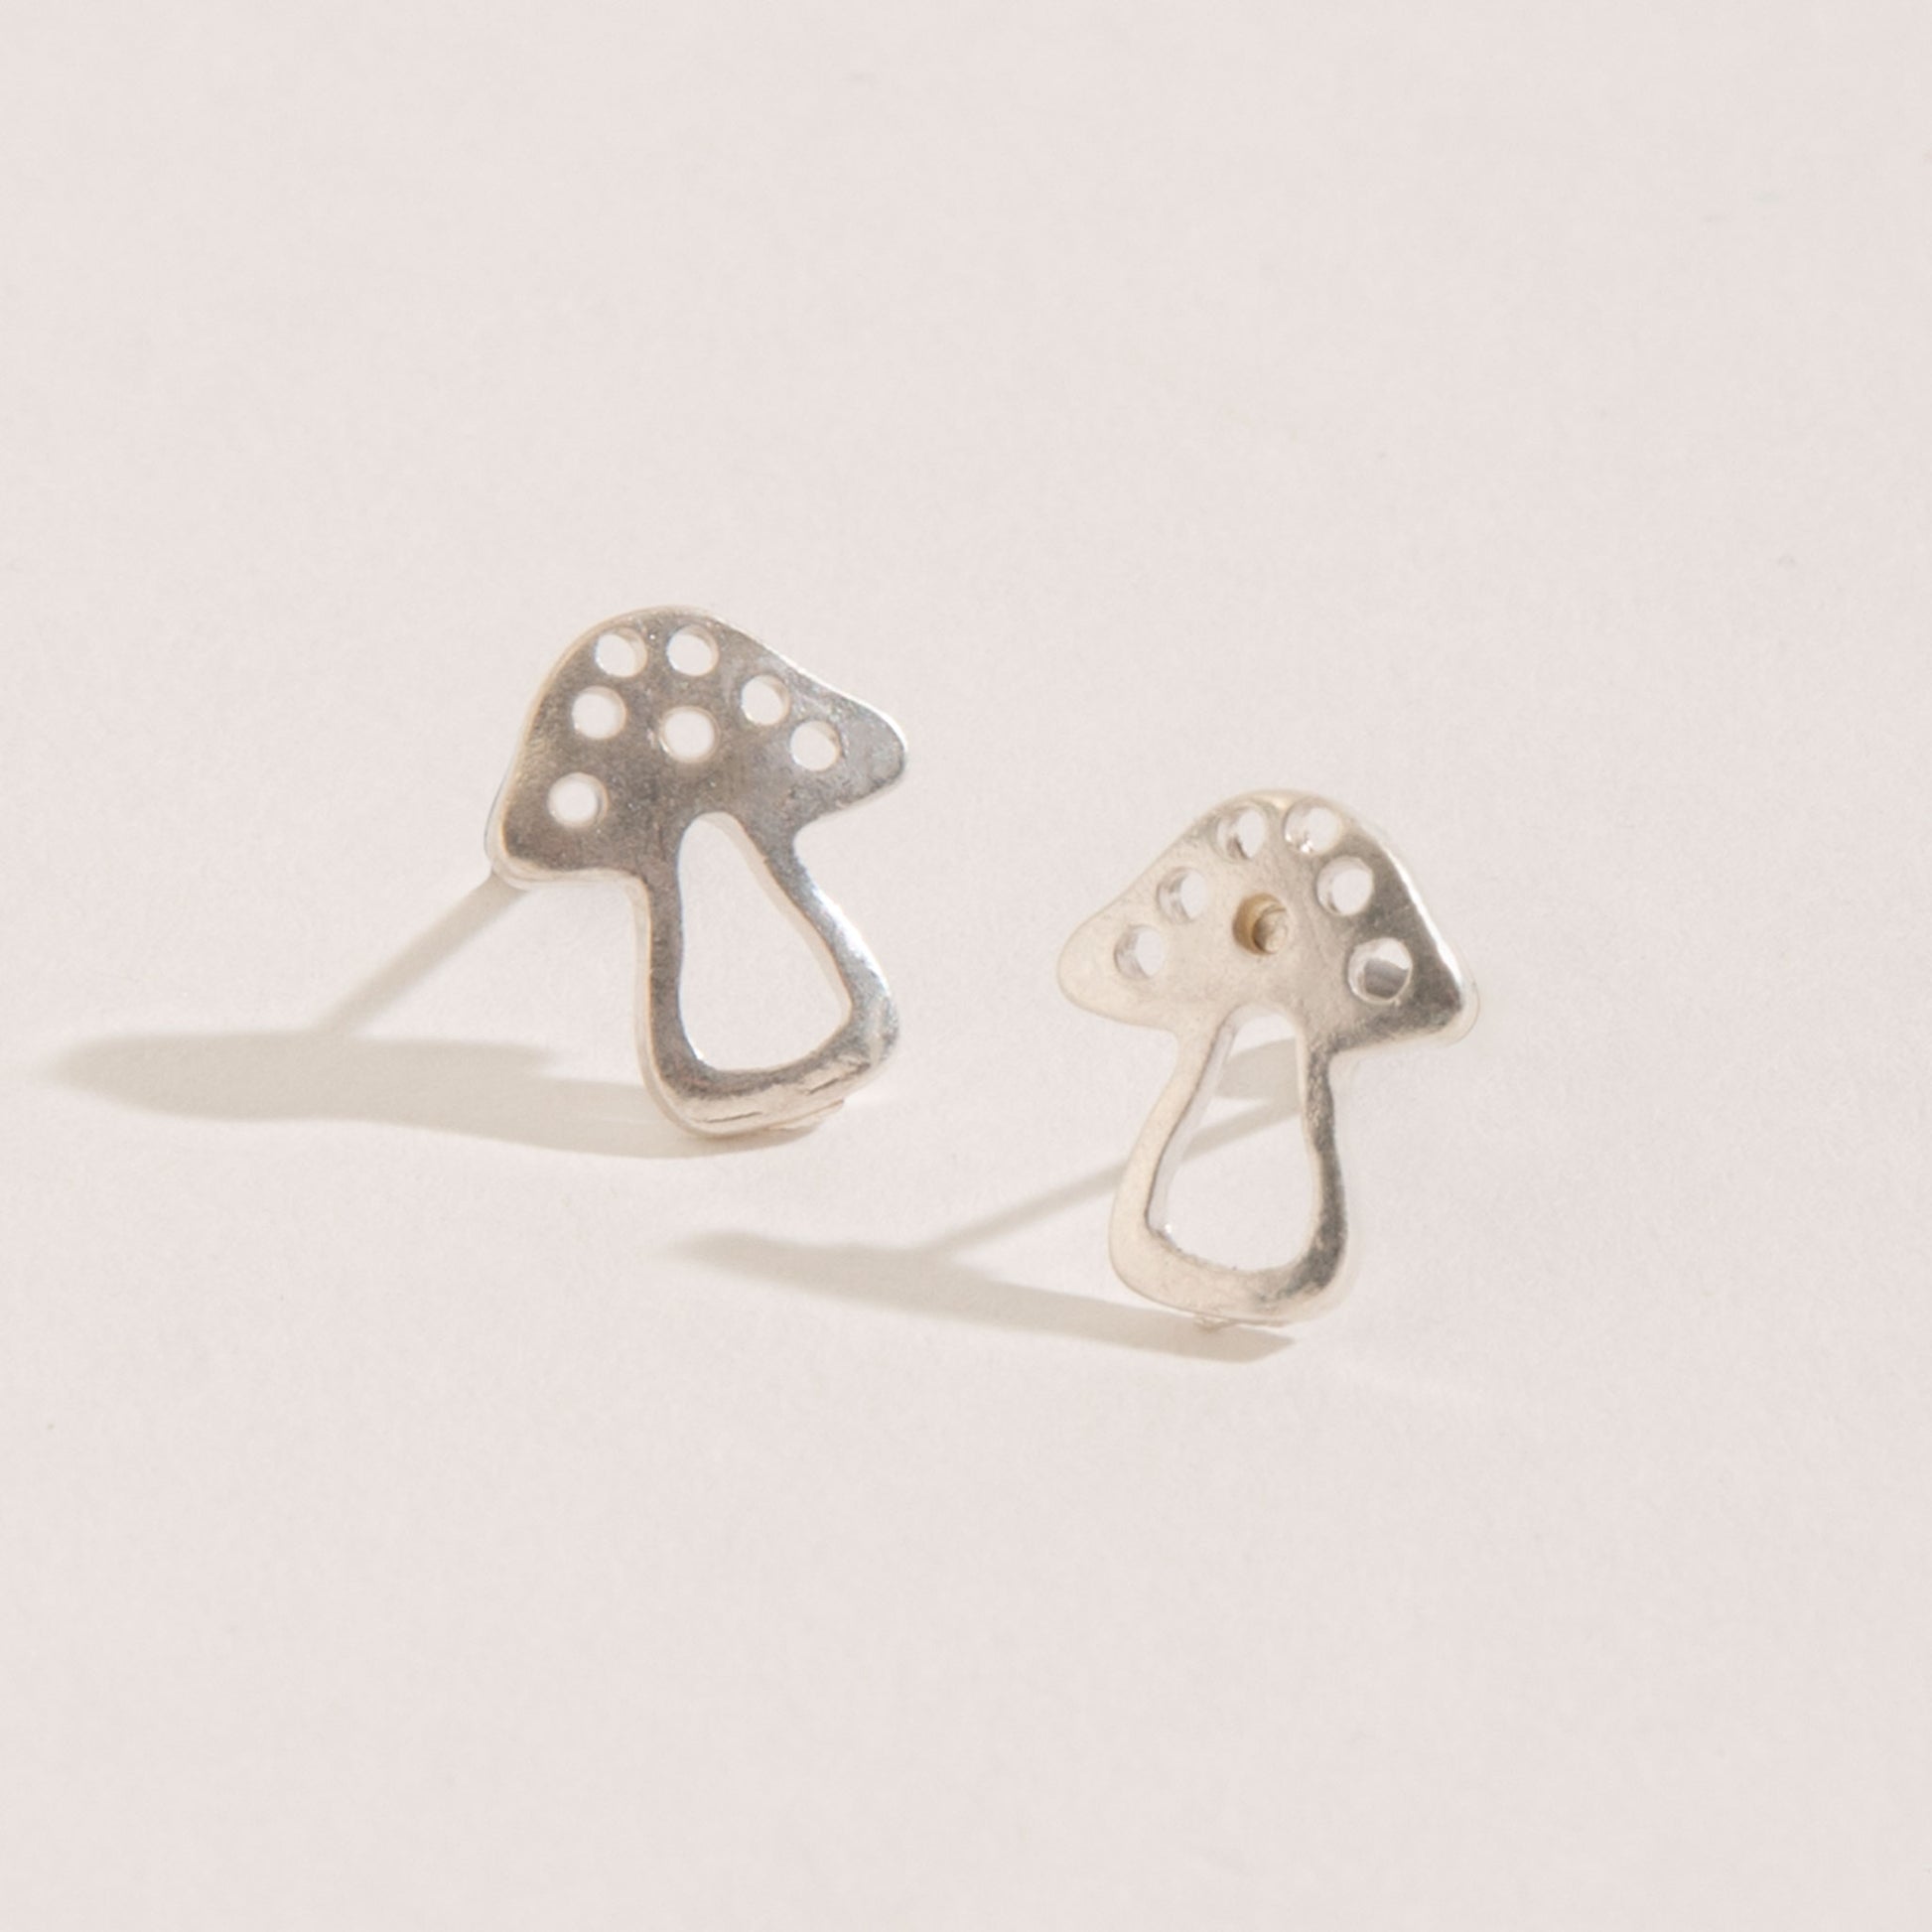 silver mushroom stud earrings on a white background